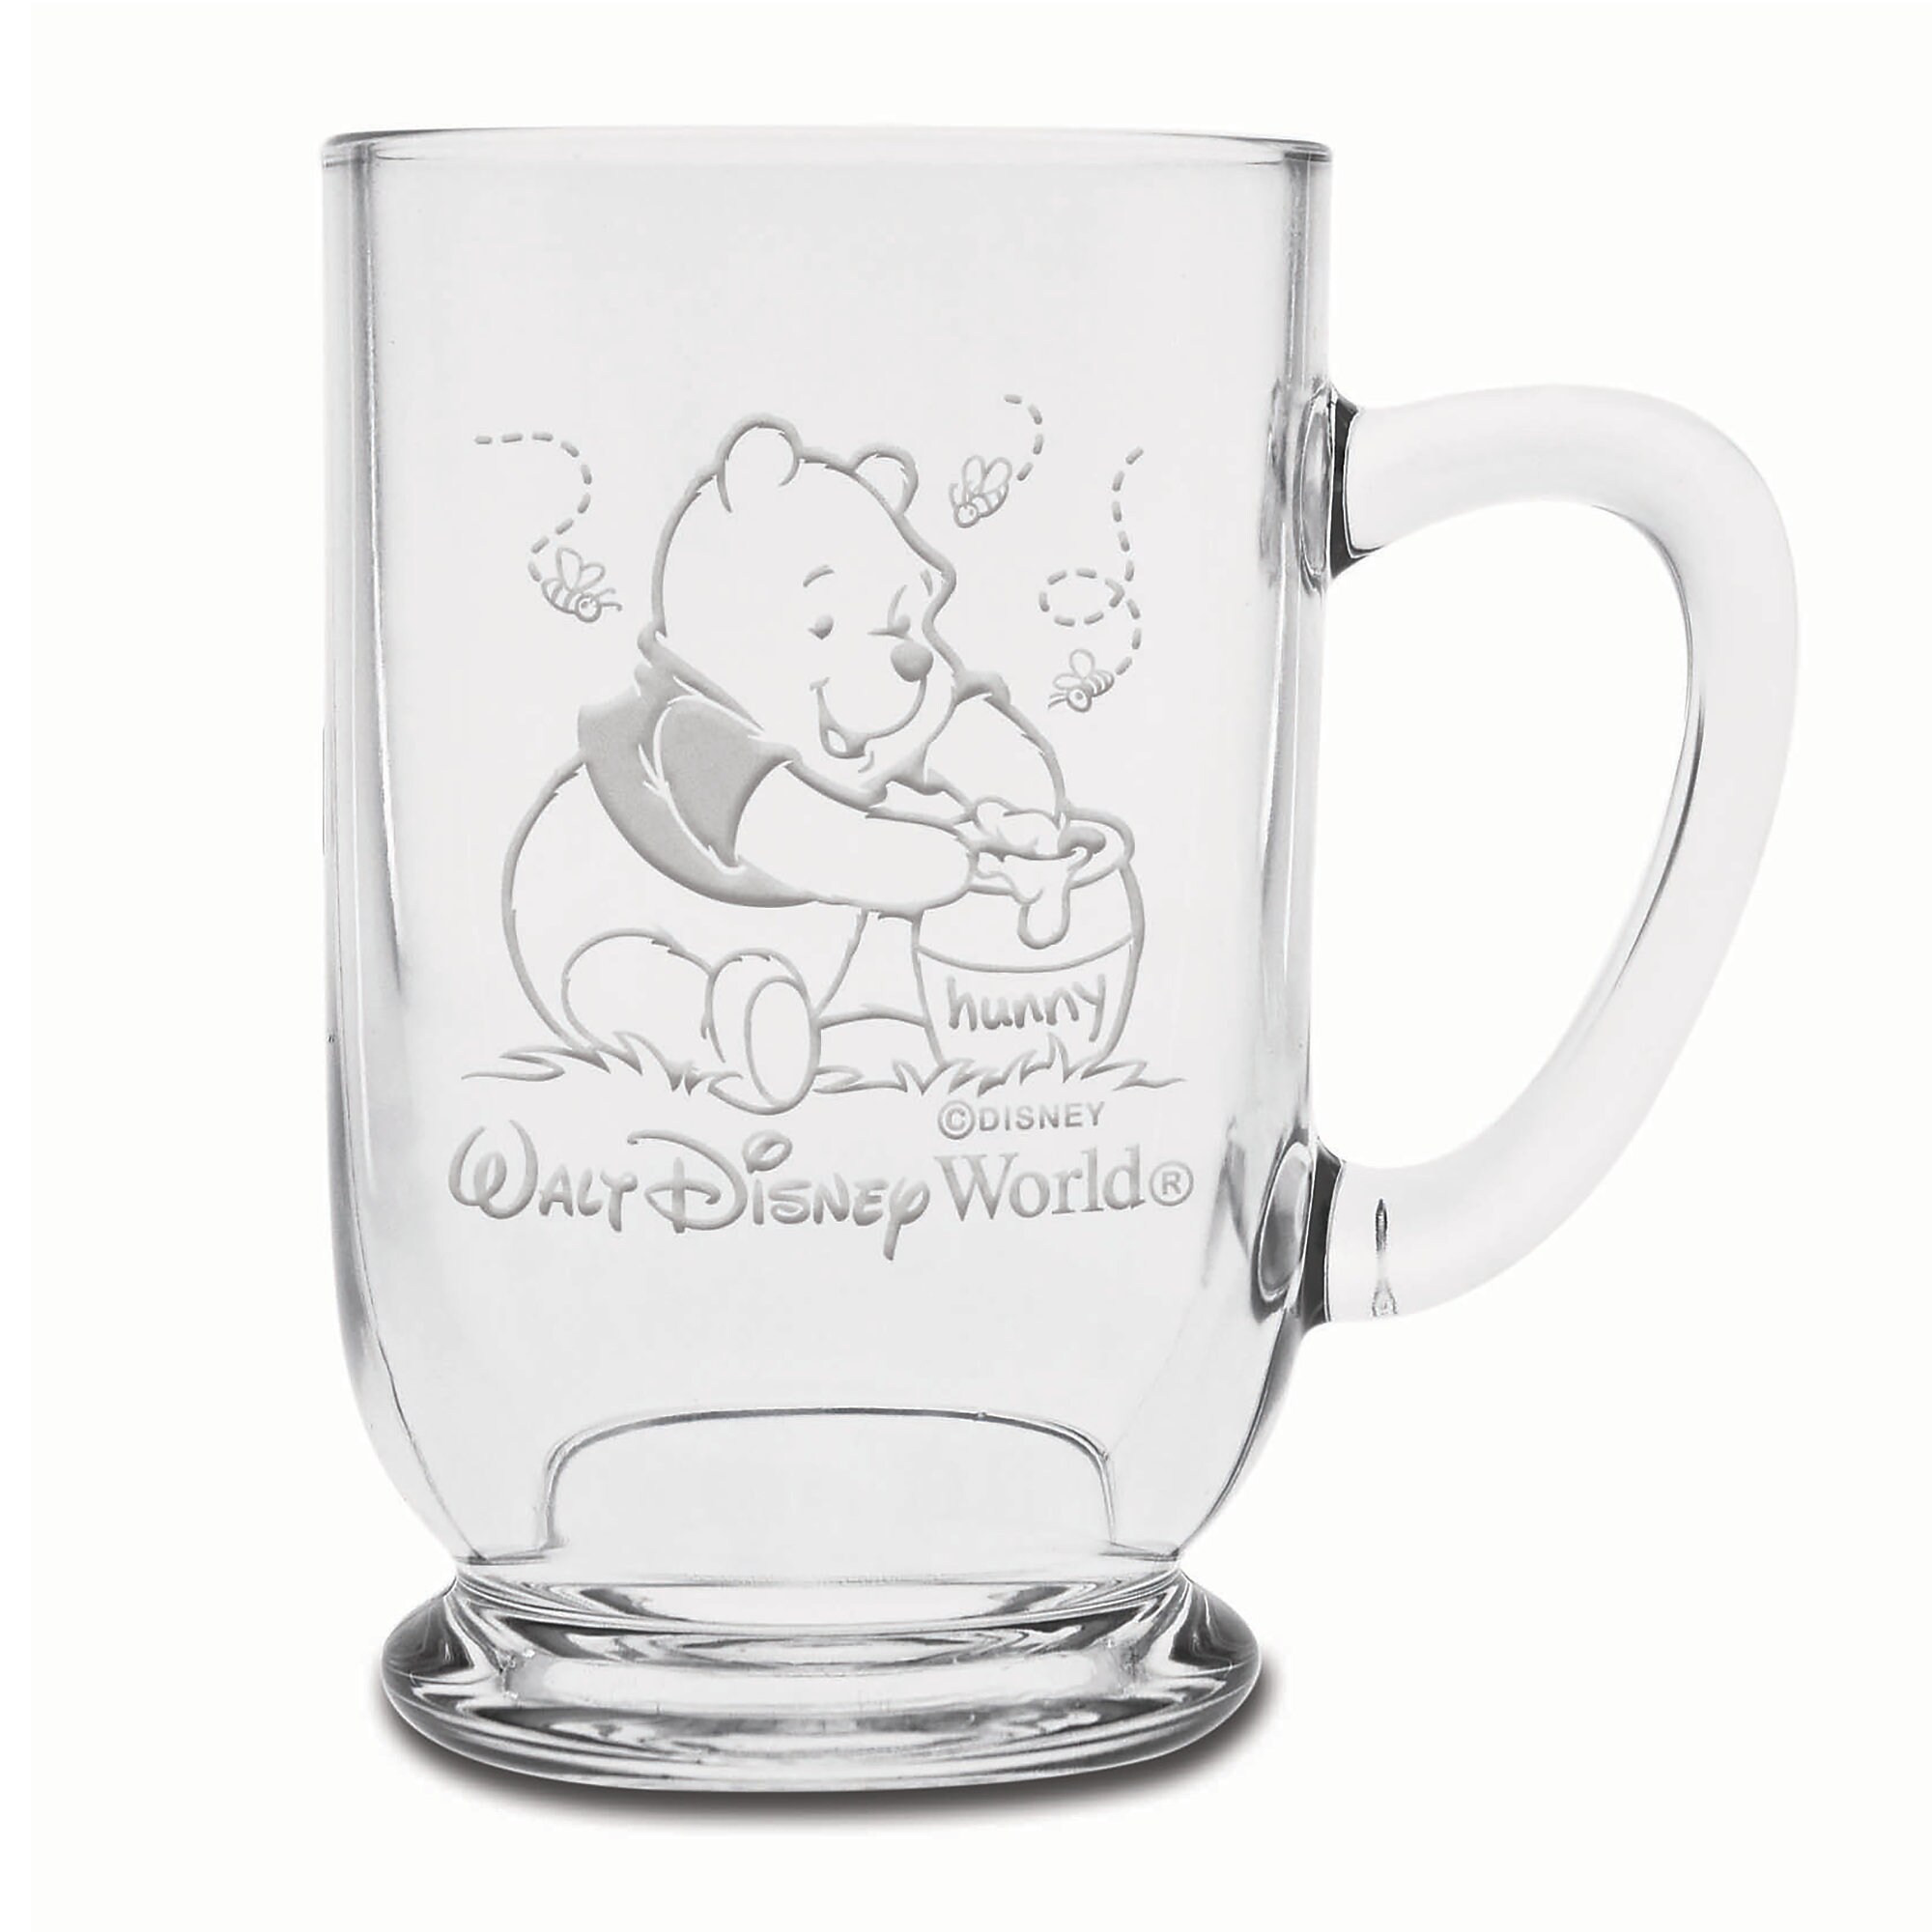 Winnie the Pooh Glass Mug by Arribas - Personalizable